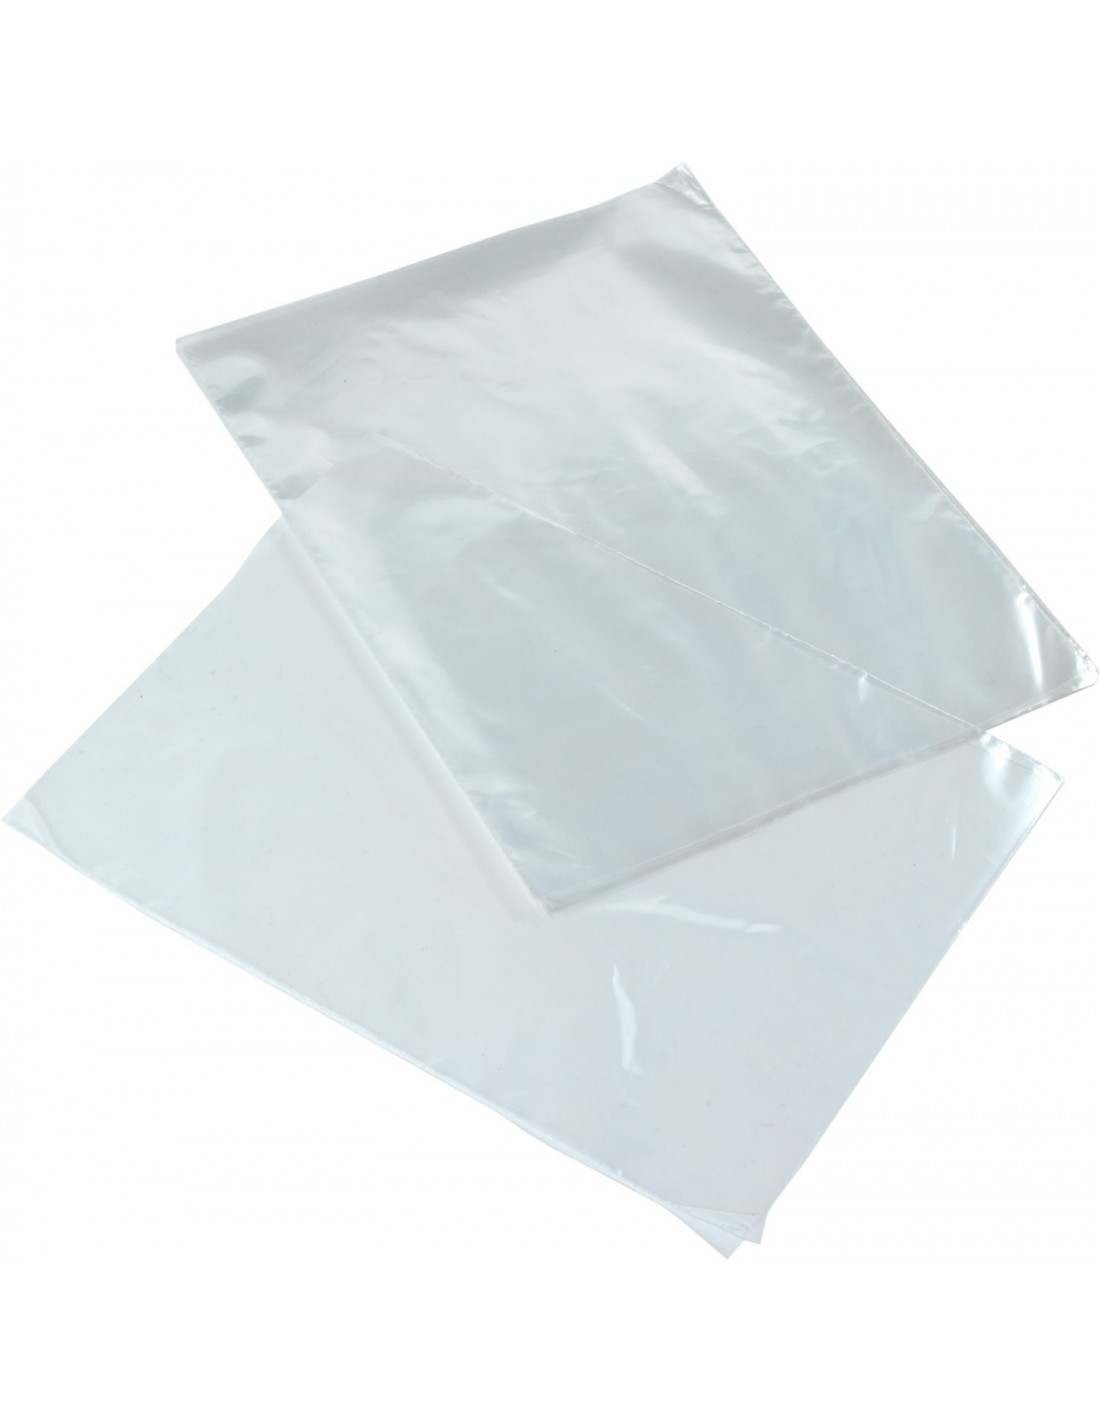 Bolsas de celofán autoadhesivas transparentes, bolsas de plástico